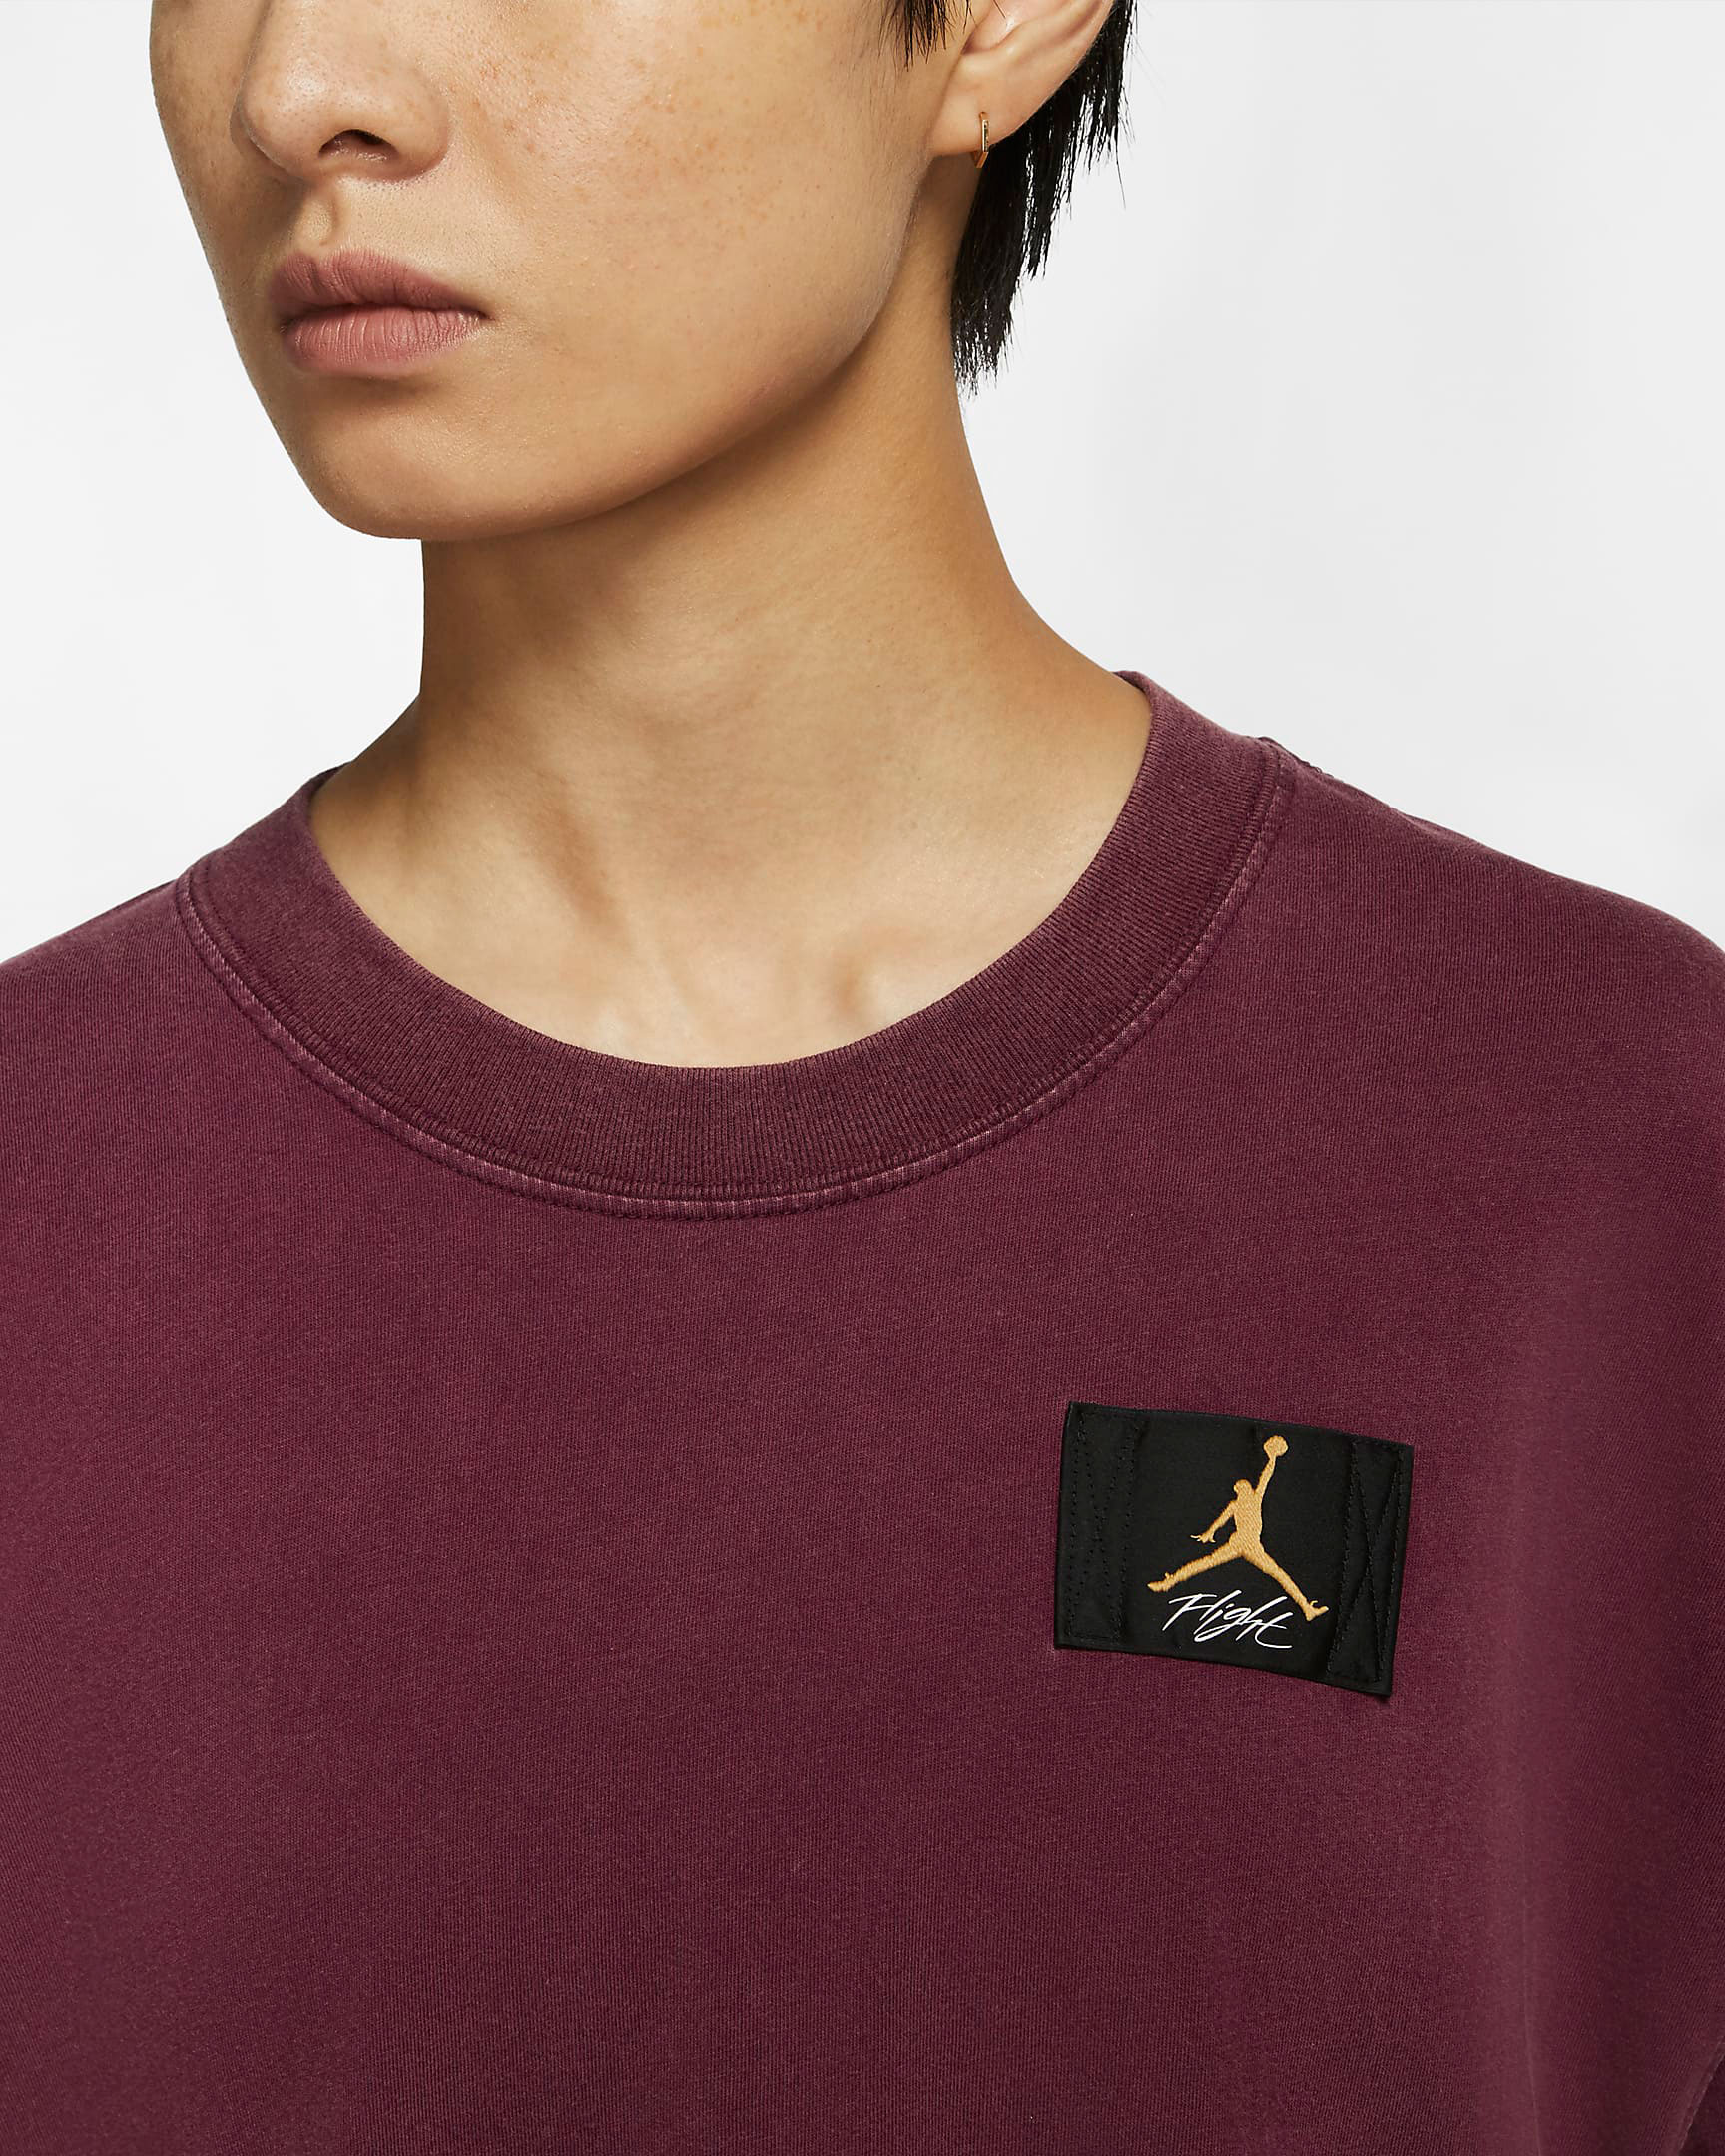 air-jordan-8-burgundy-beetroot-womens-jordan-tee-shirt